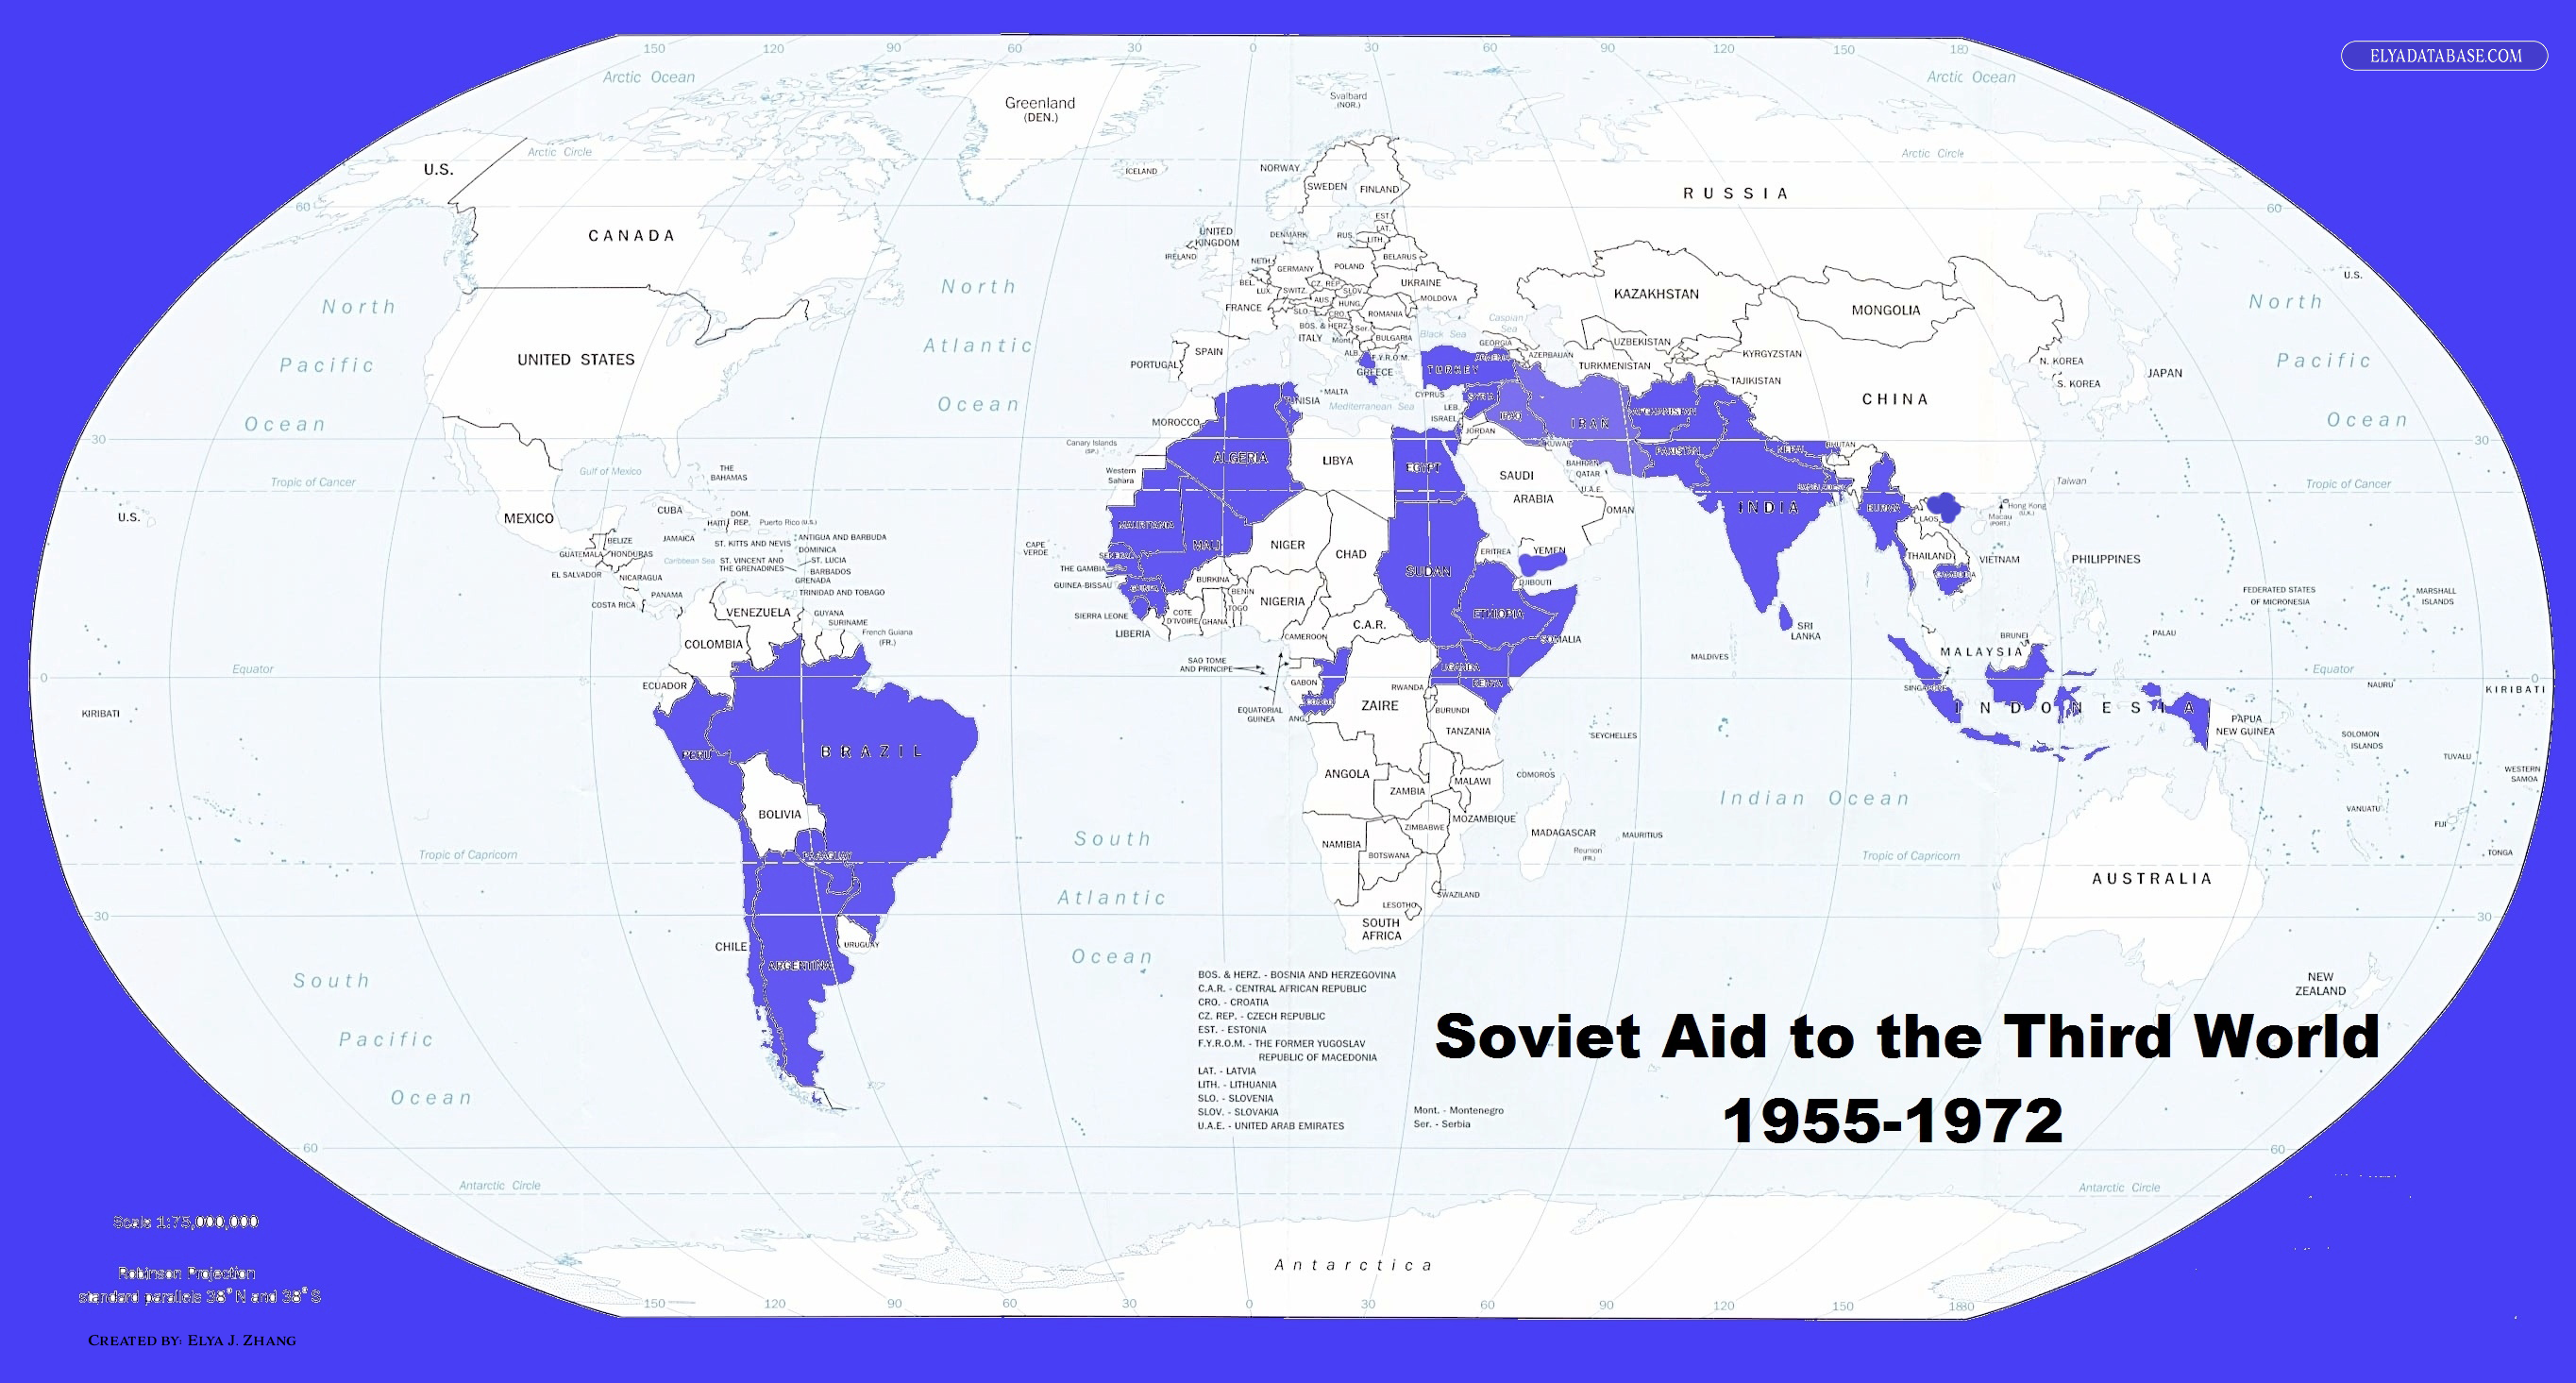 Soviet Aid to the Third World: 1955-1972